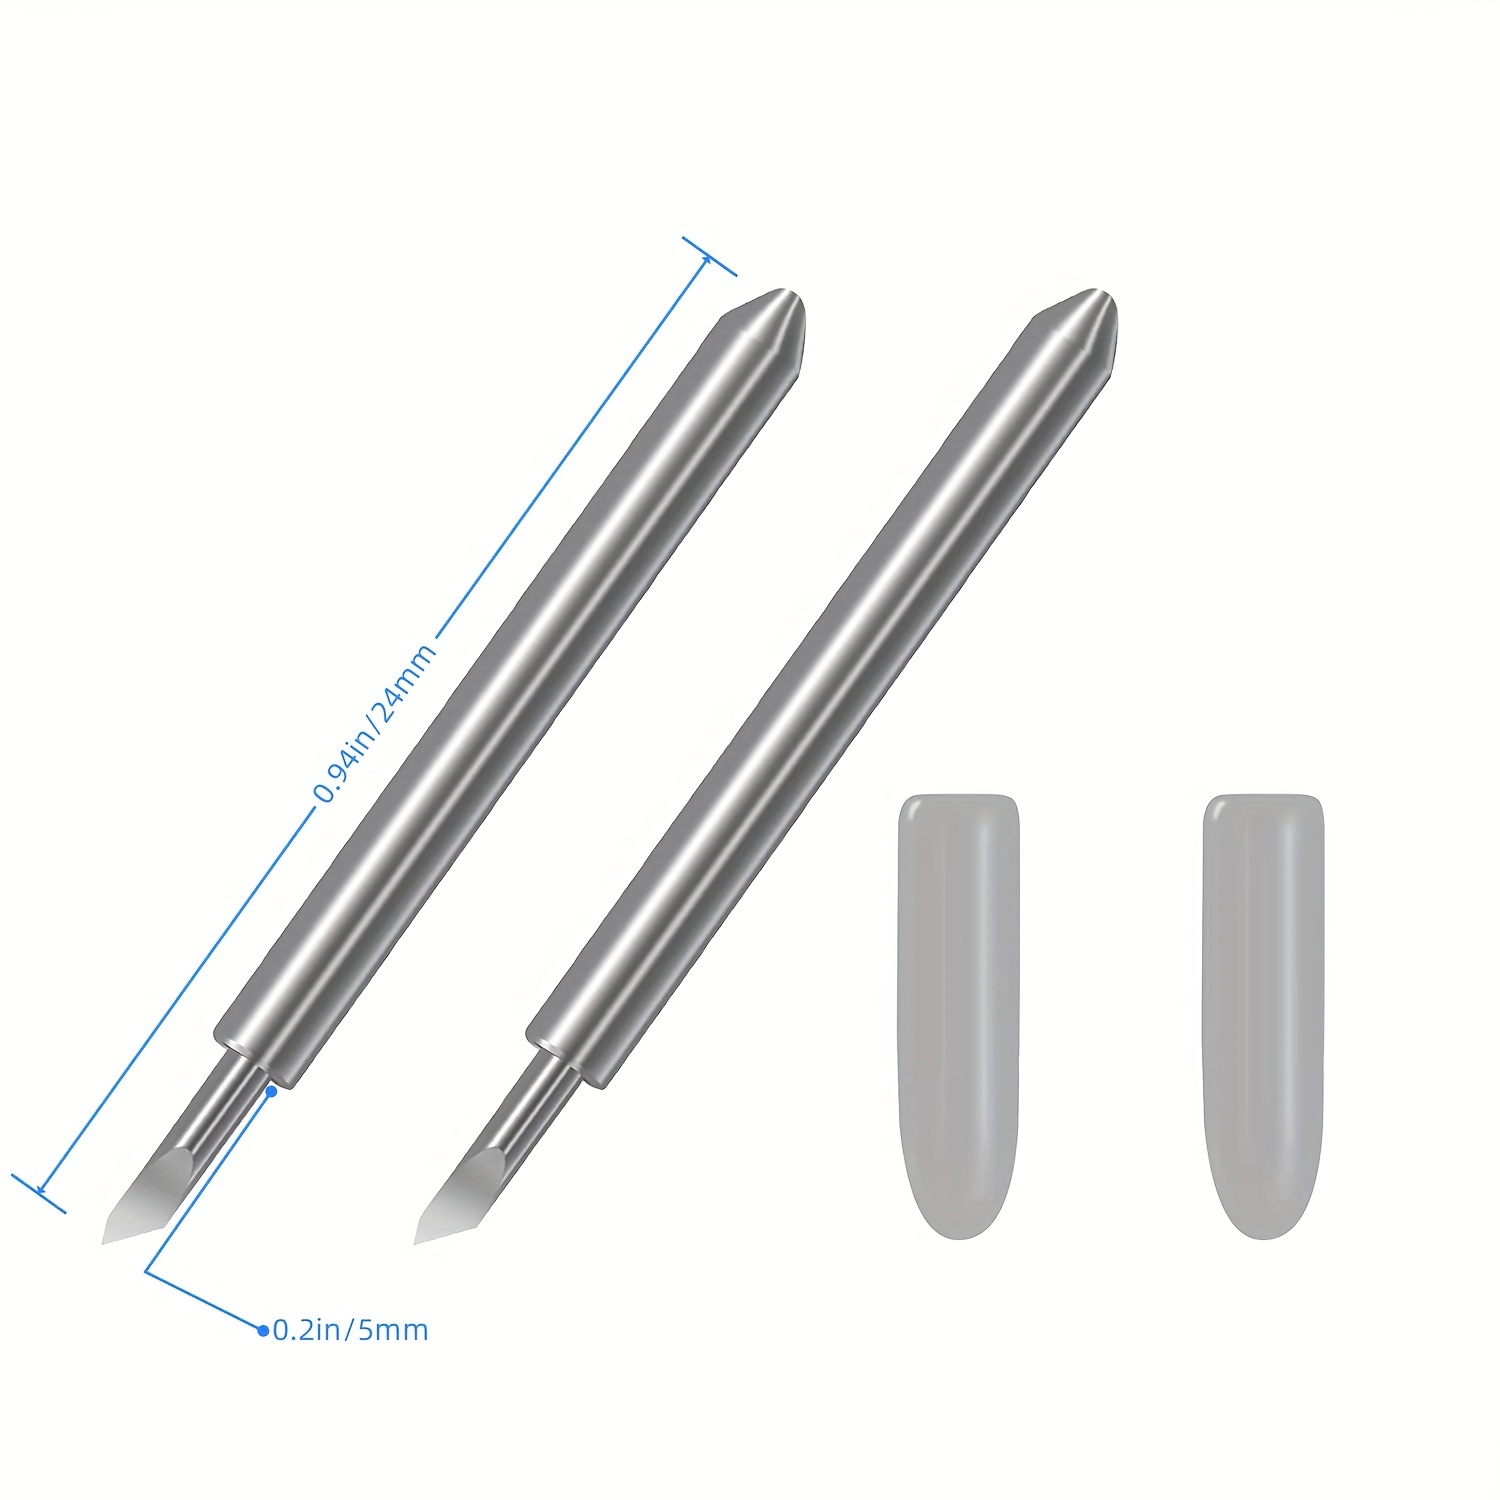 Premium Fine Point Blade Compatible With Cricut Maker/maker - Temu